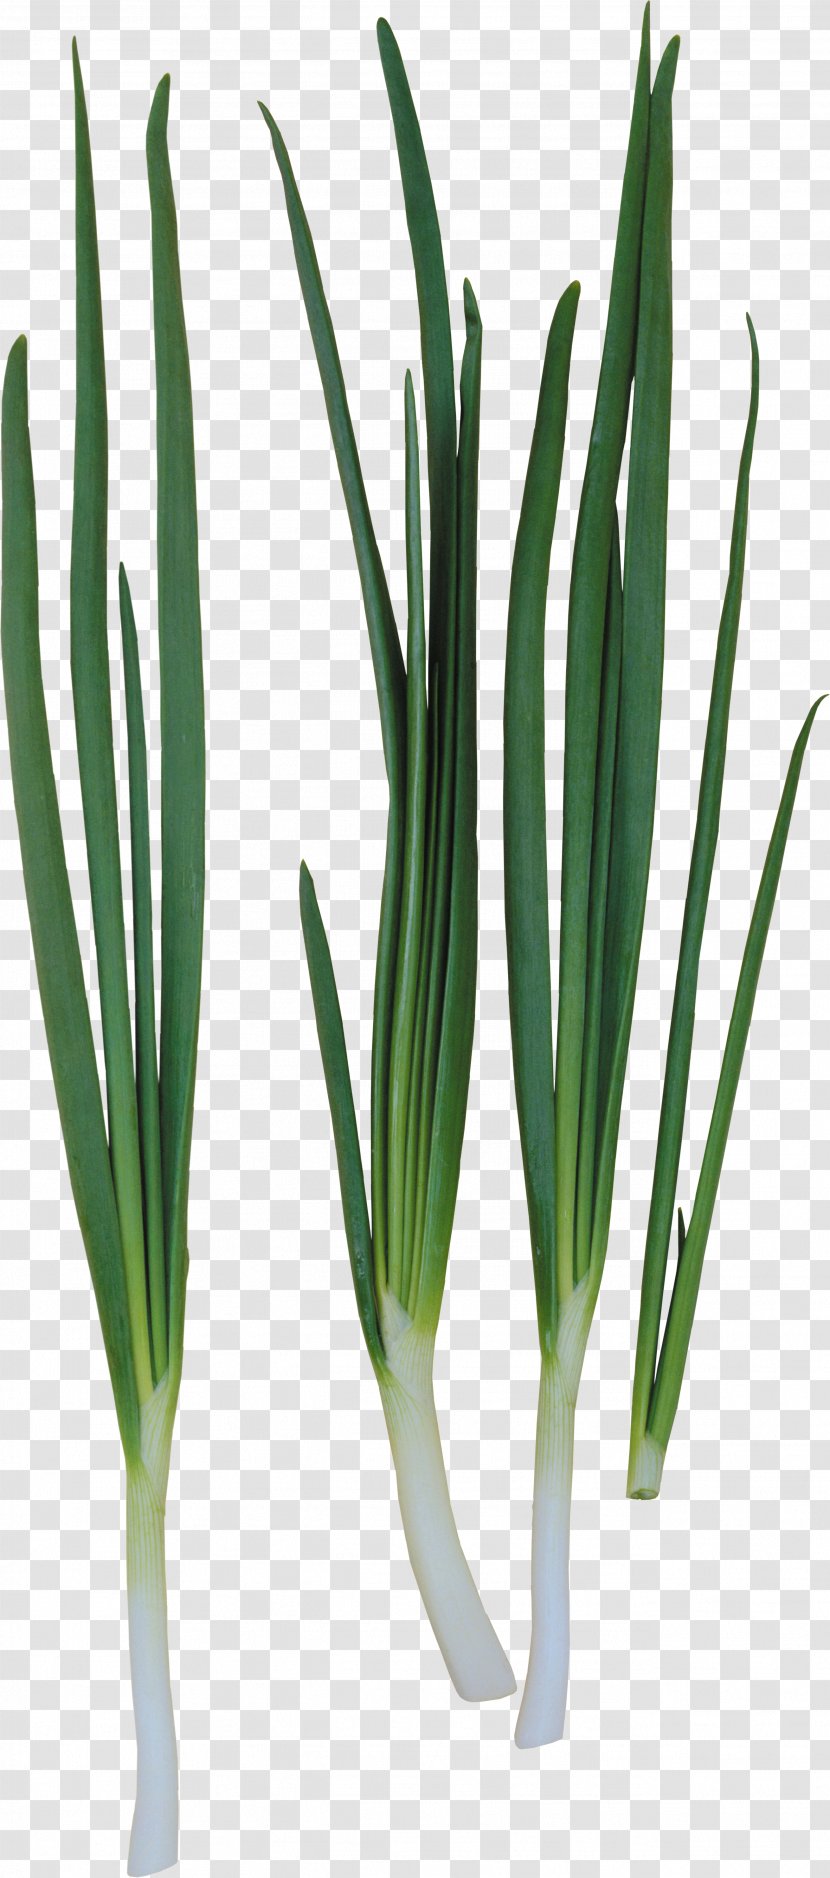 Allium Fistulosum Onion Ring Garlic - Grass Family Transparent PNG